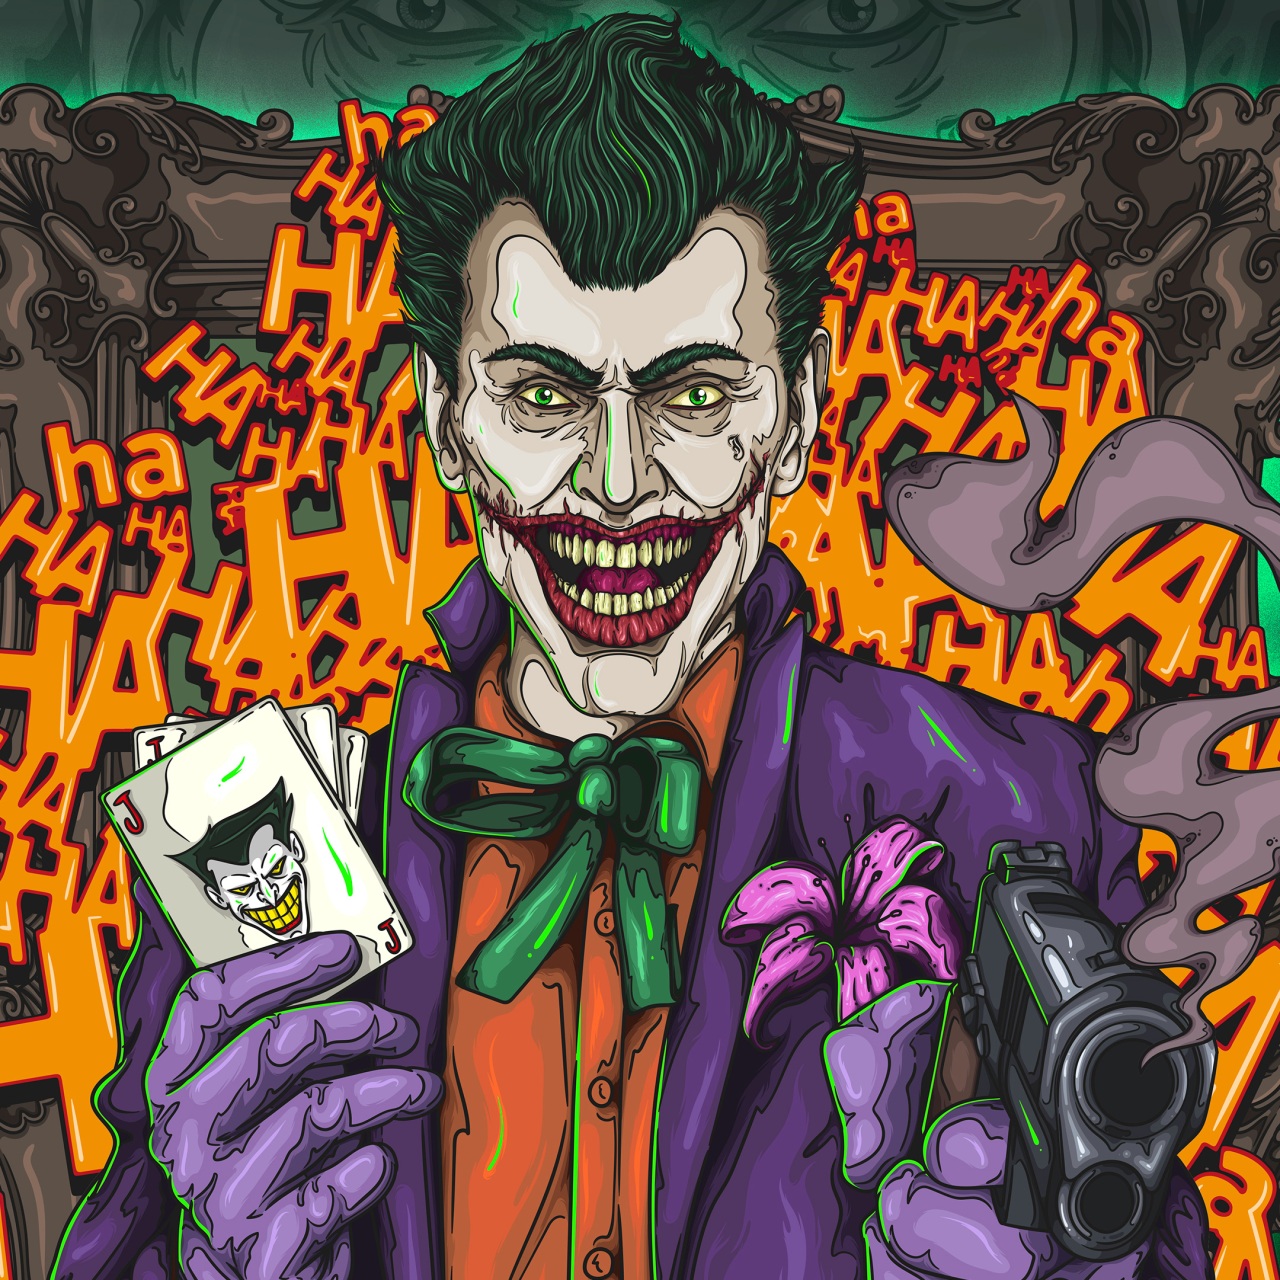 The Joker 4k Artwork - 4k Wallpapers - 40.000+ ipad wallpapers 4k - 4k ...